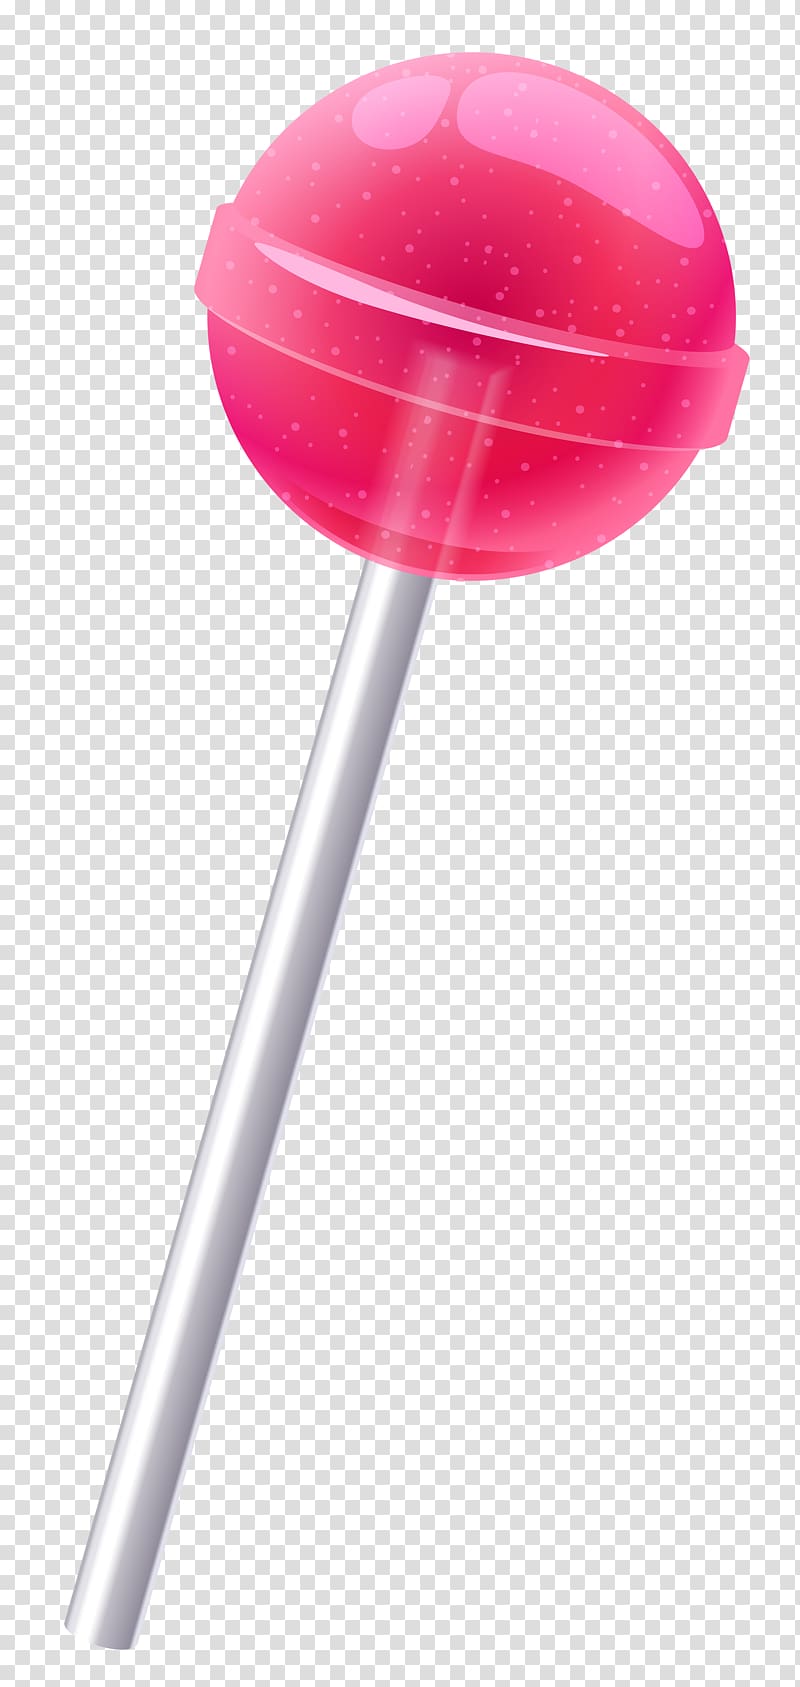 pink lollipop graphic, Lollipop Chupa Chups Candy Chocolate sandwich, chupa chups transparent background PNG clipart